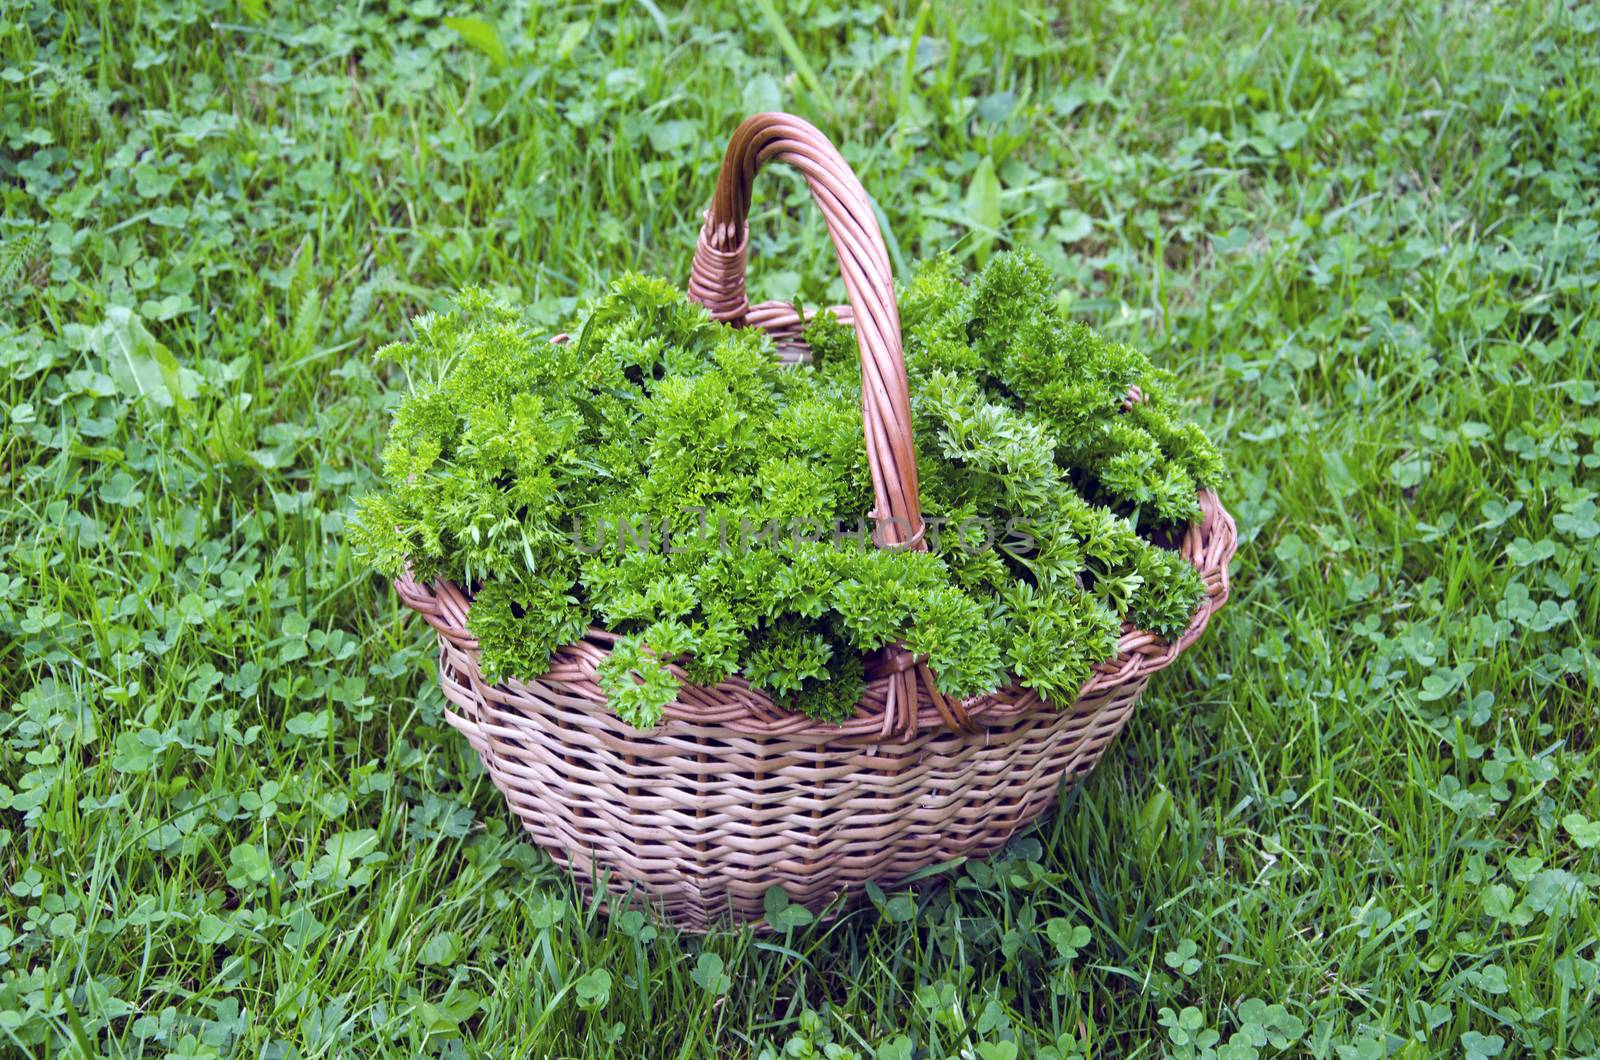 Fresh parsley in wicker basket on lawn by alis_photo